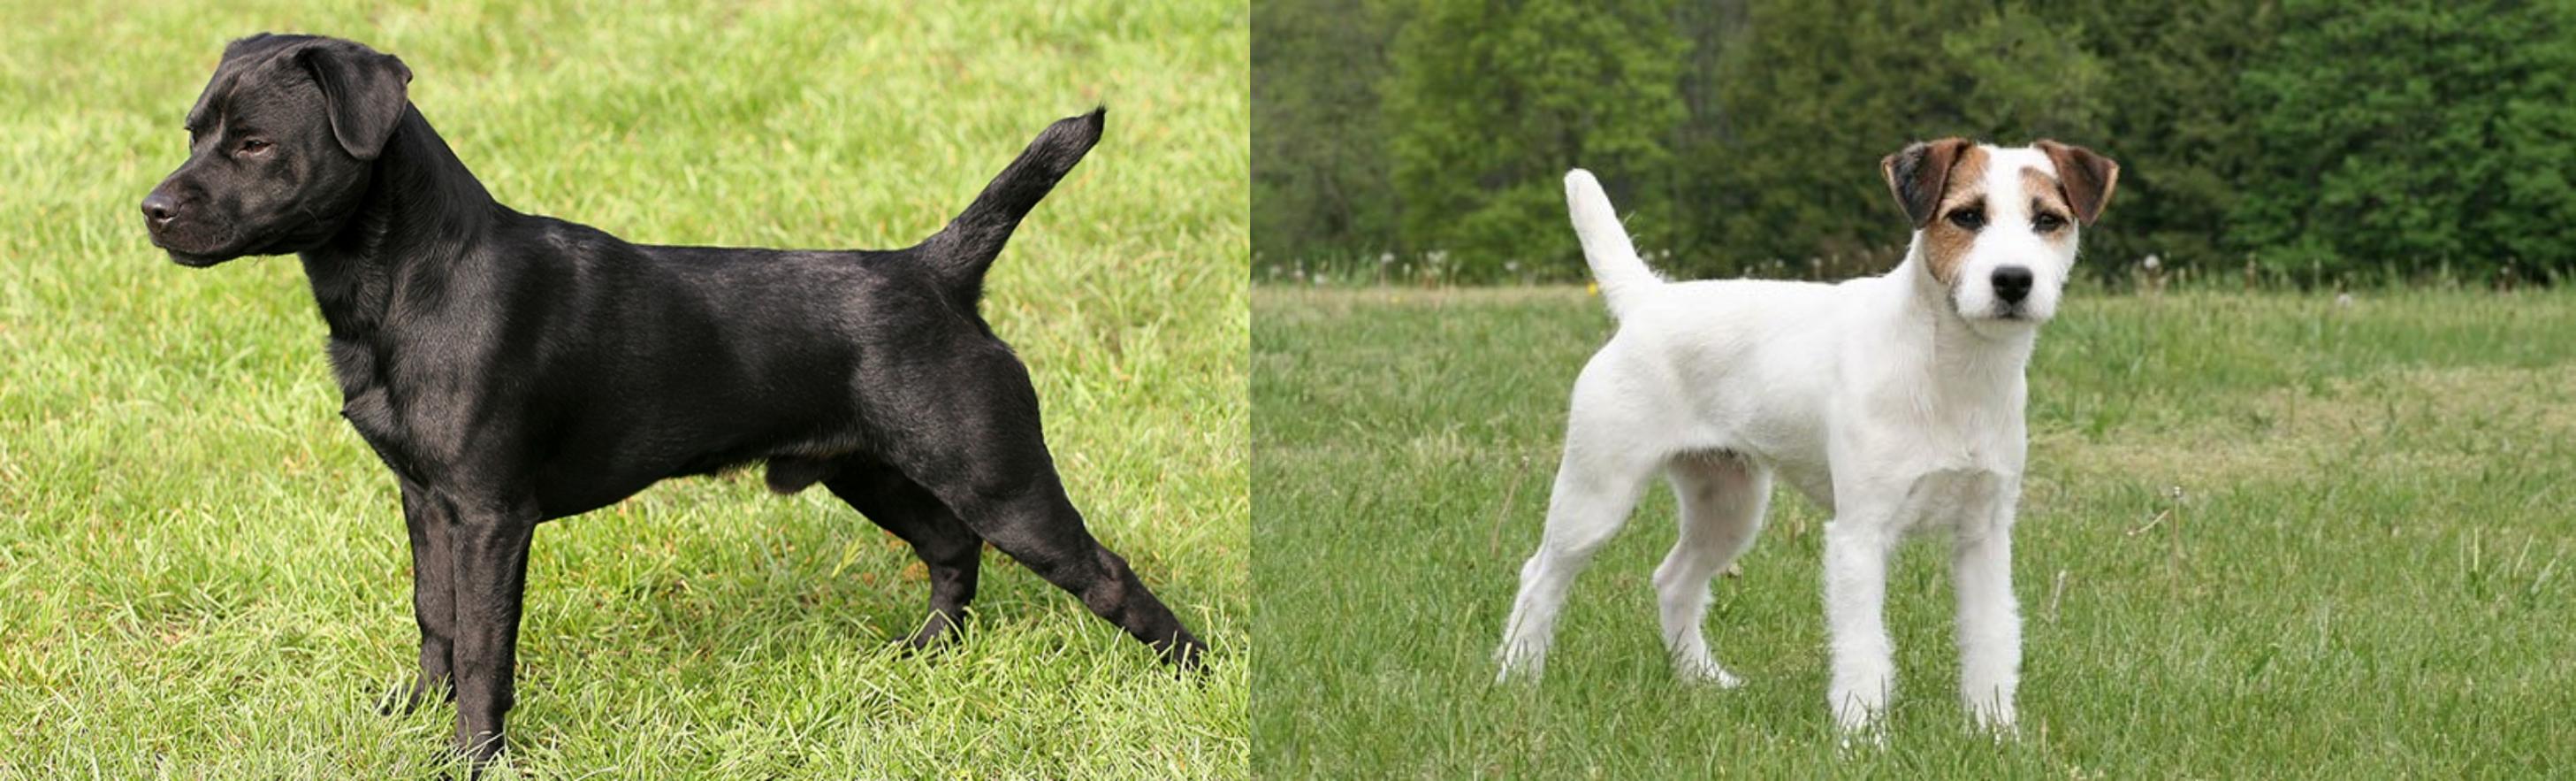 Patterdale Terrier Vs Jack Russell Terrier Breed Comparison